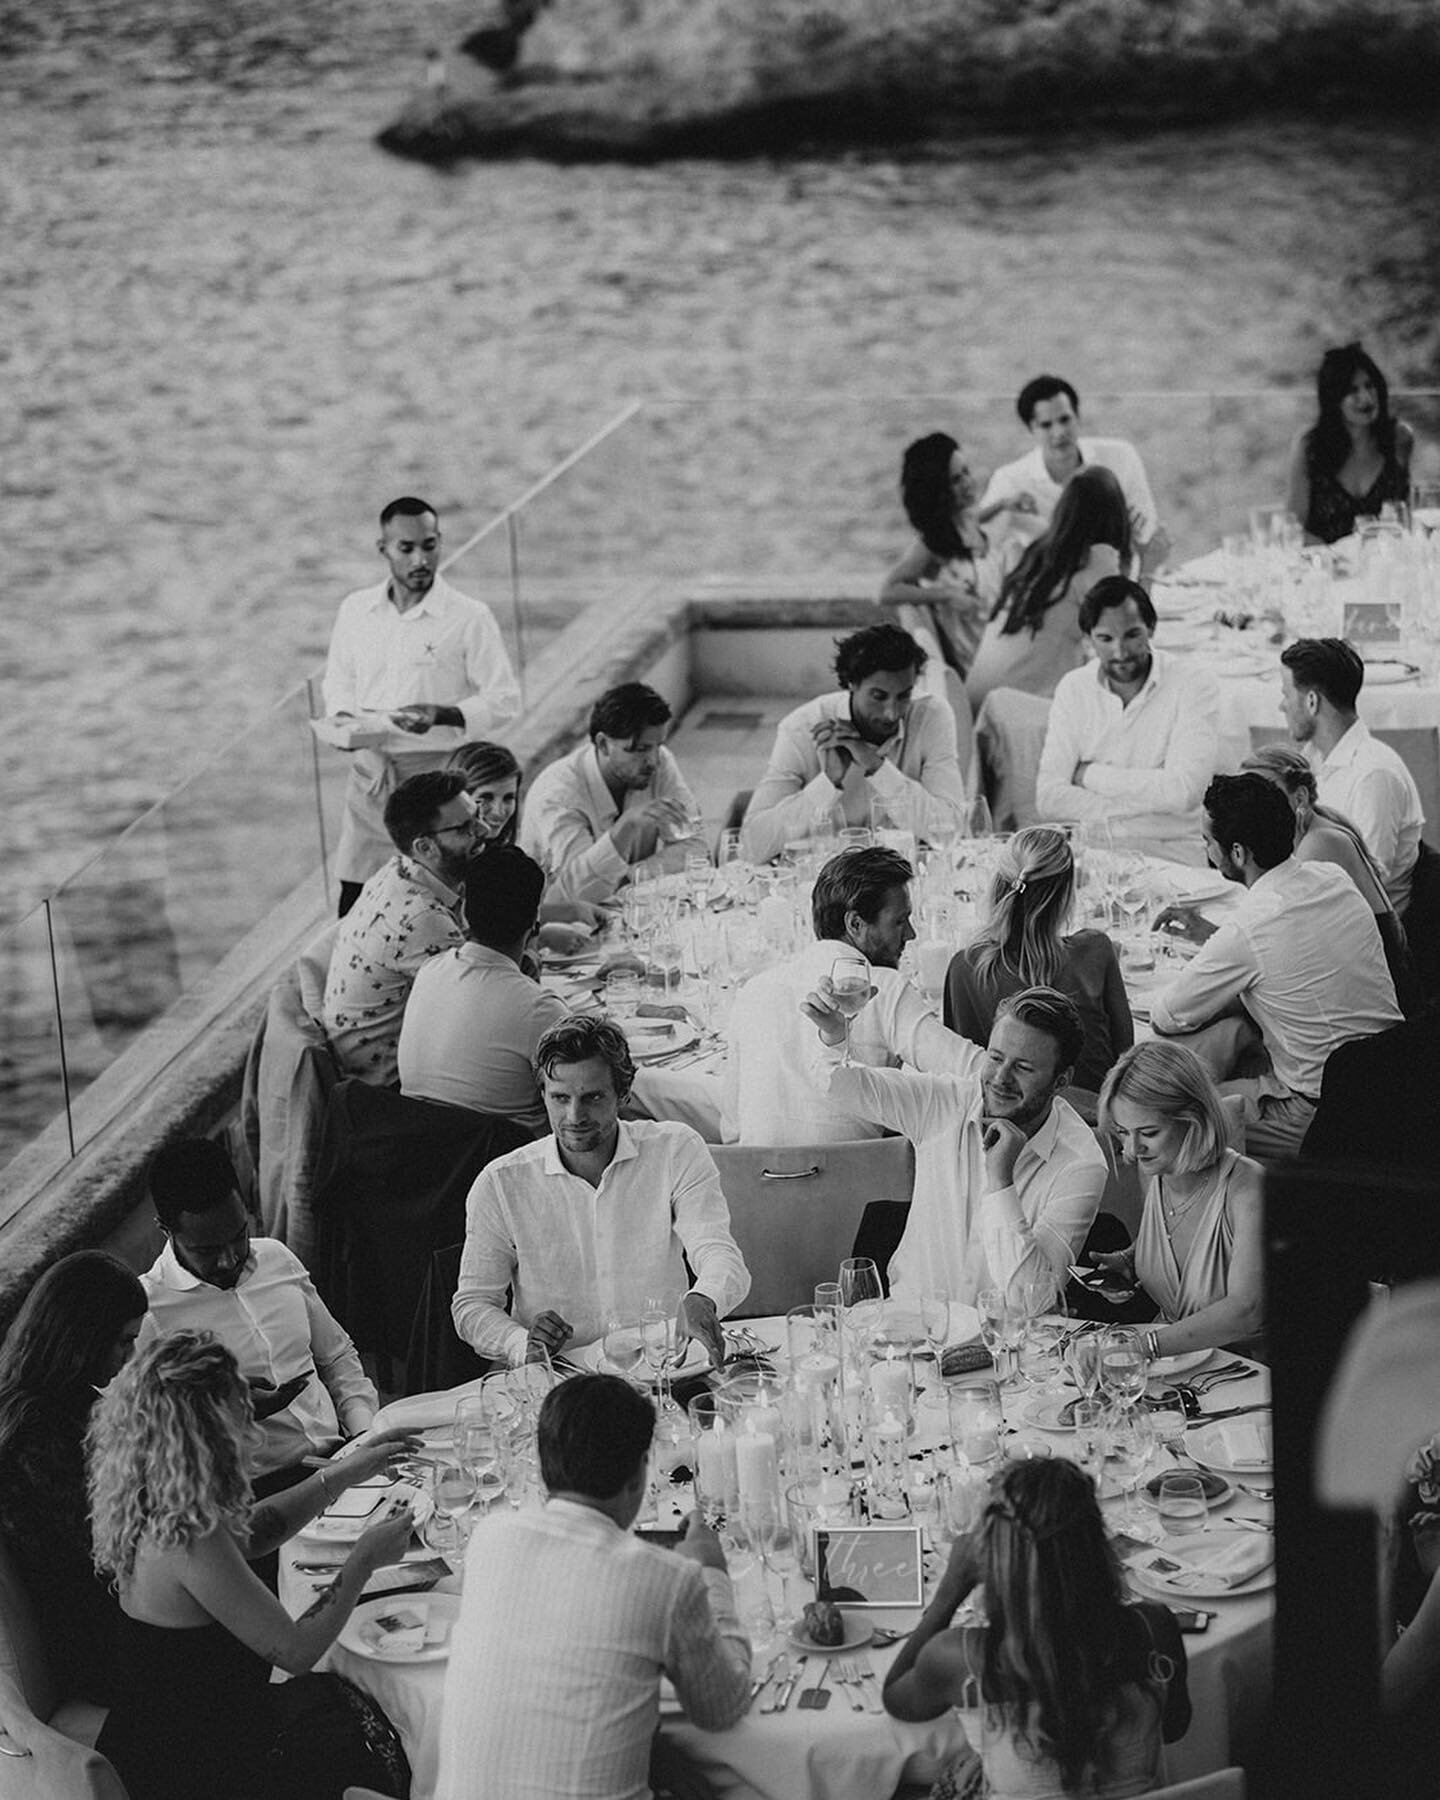 Seaside dinners hit different 🤍🌊
.
.
Photographer @laurenknuckeyphotography 
Planner @theweddingsocialclub 

#mallorcawedding #weddingplanner #mallorcaweddingplanner #seasidewedding #weddingbythesea #seasideweddingmallorca #islasbaleares #blackandw